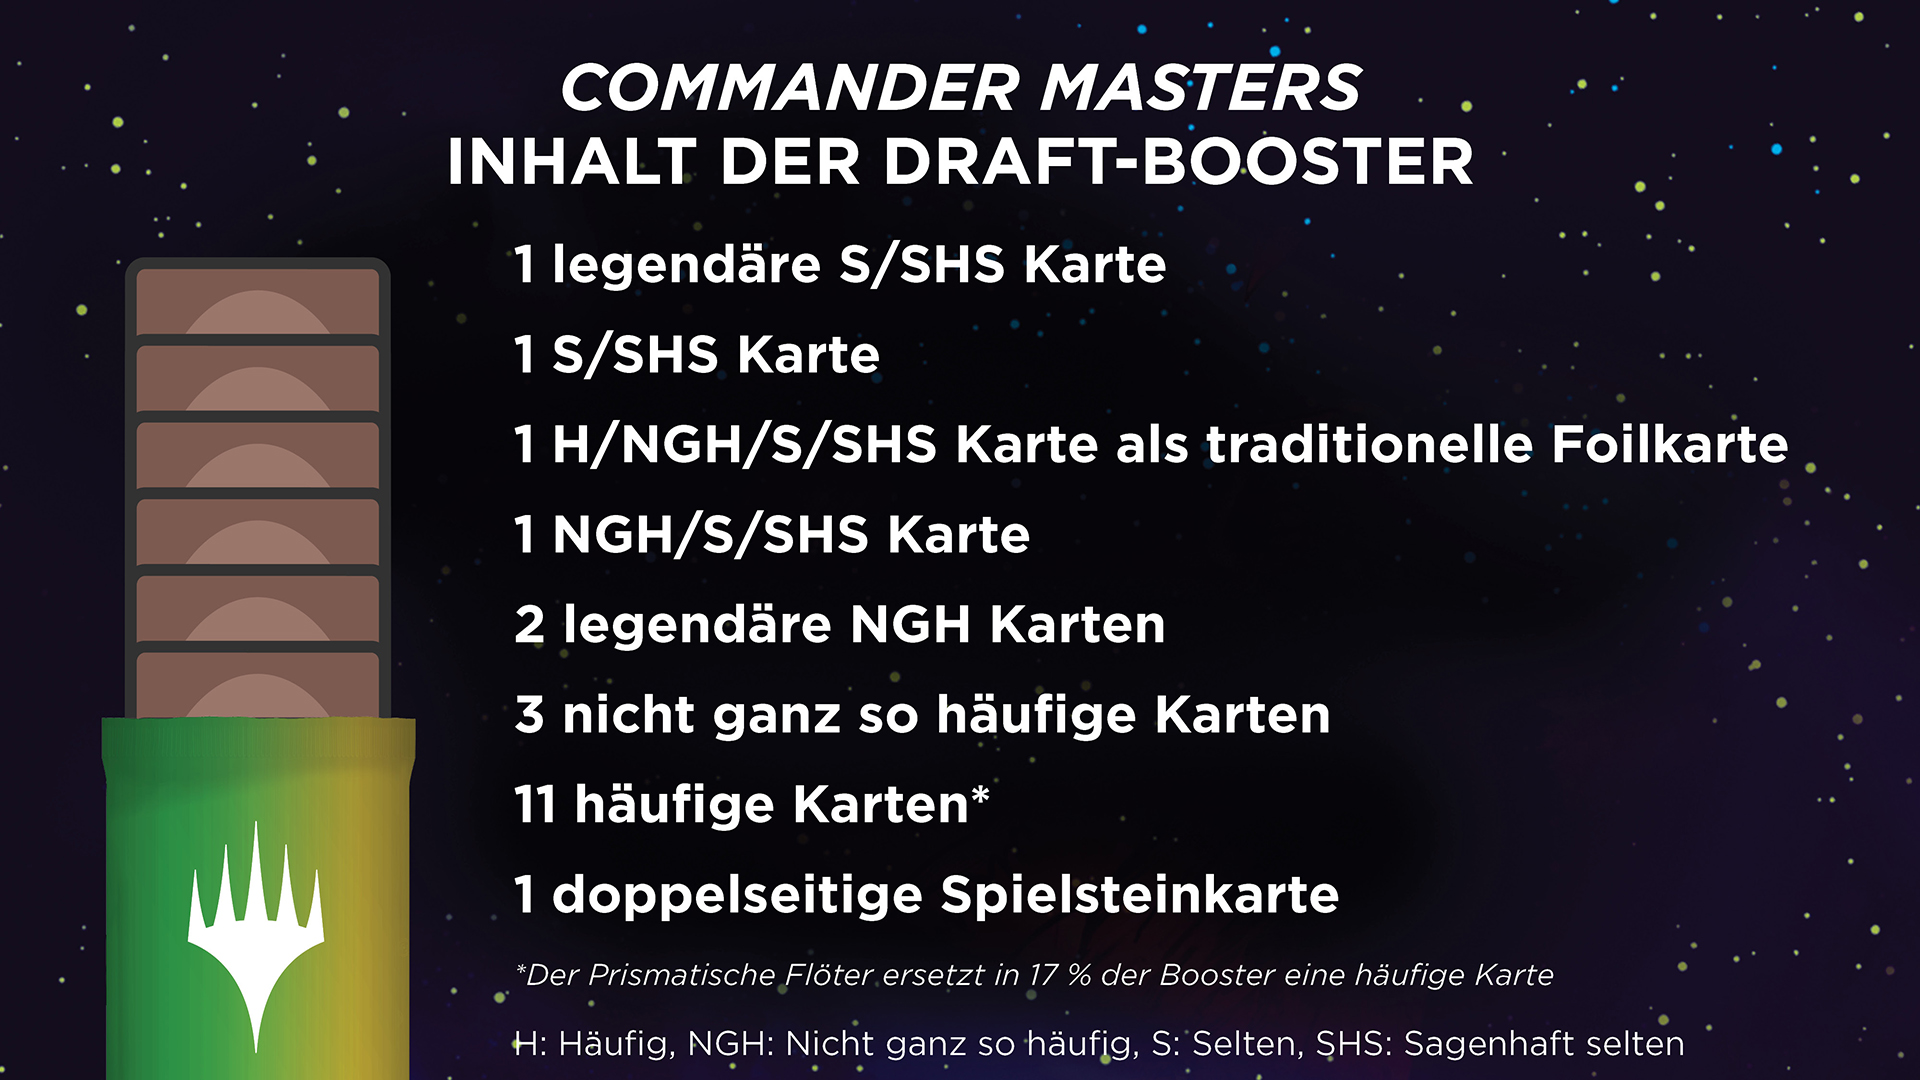 Inhalt der Commander Masters Draft-Booster